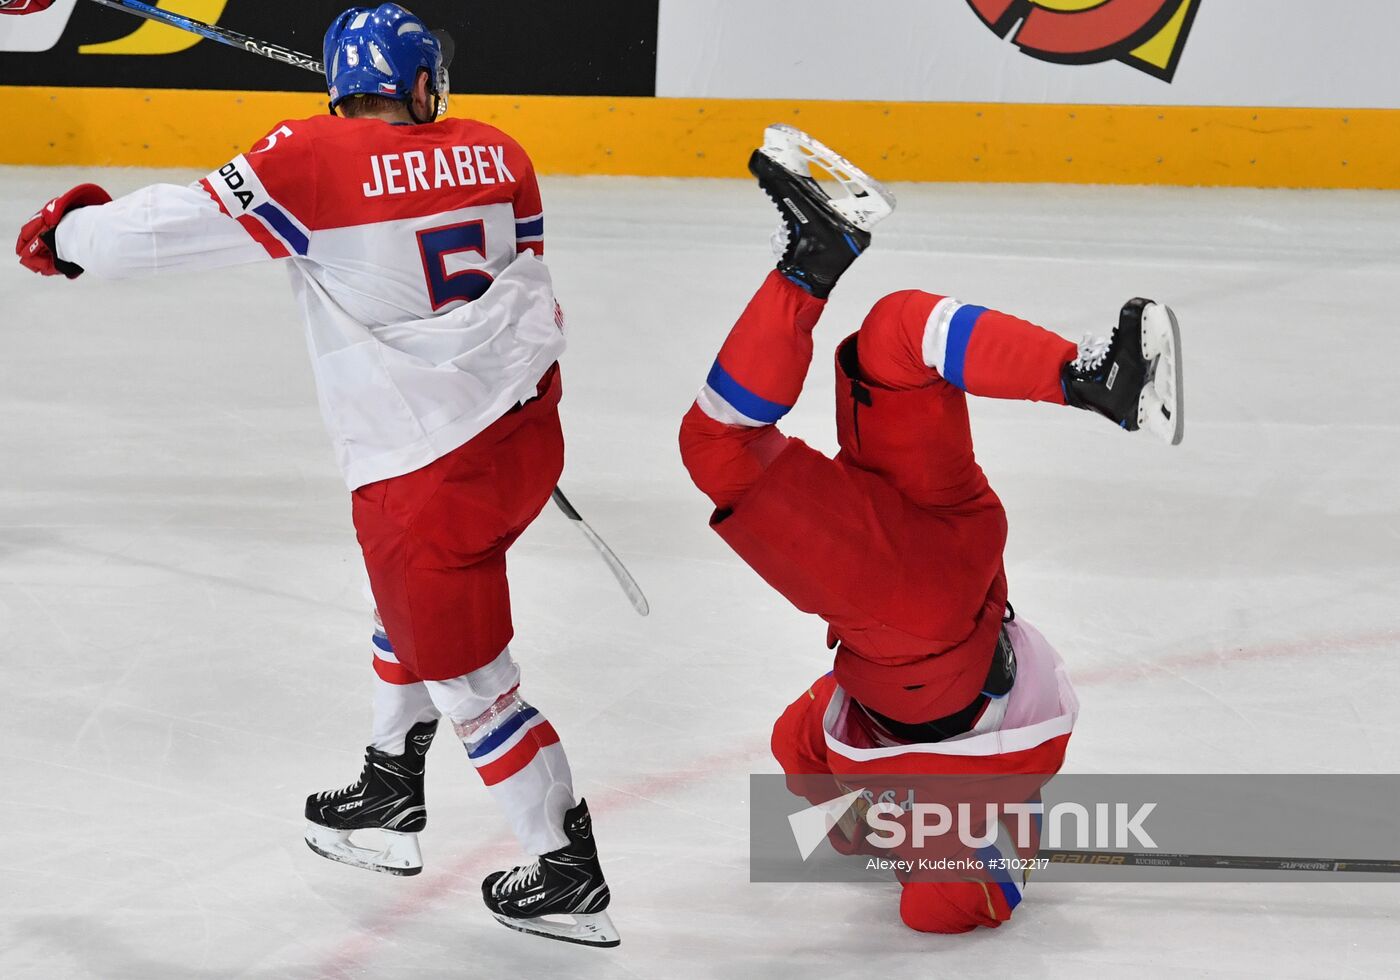 2017 IIHF World Championship. Russia vs. Czech Republic